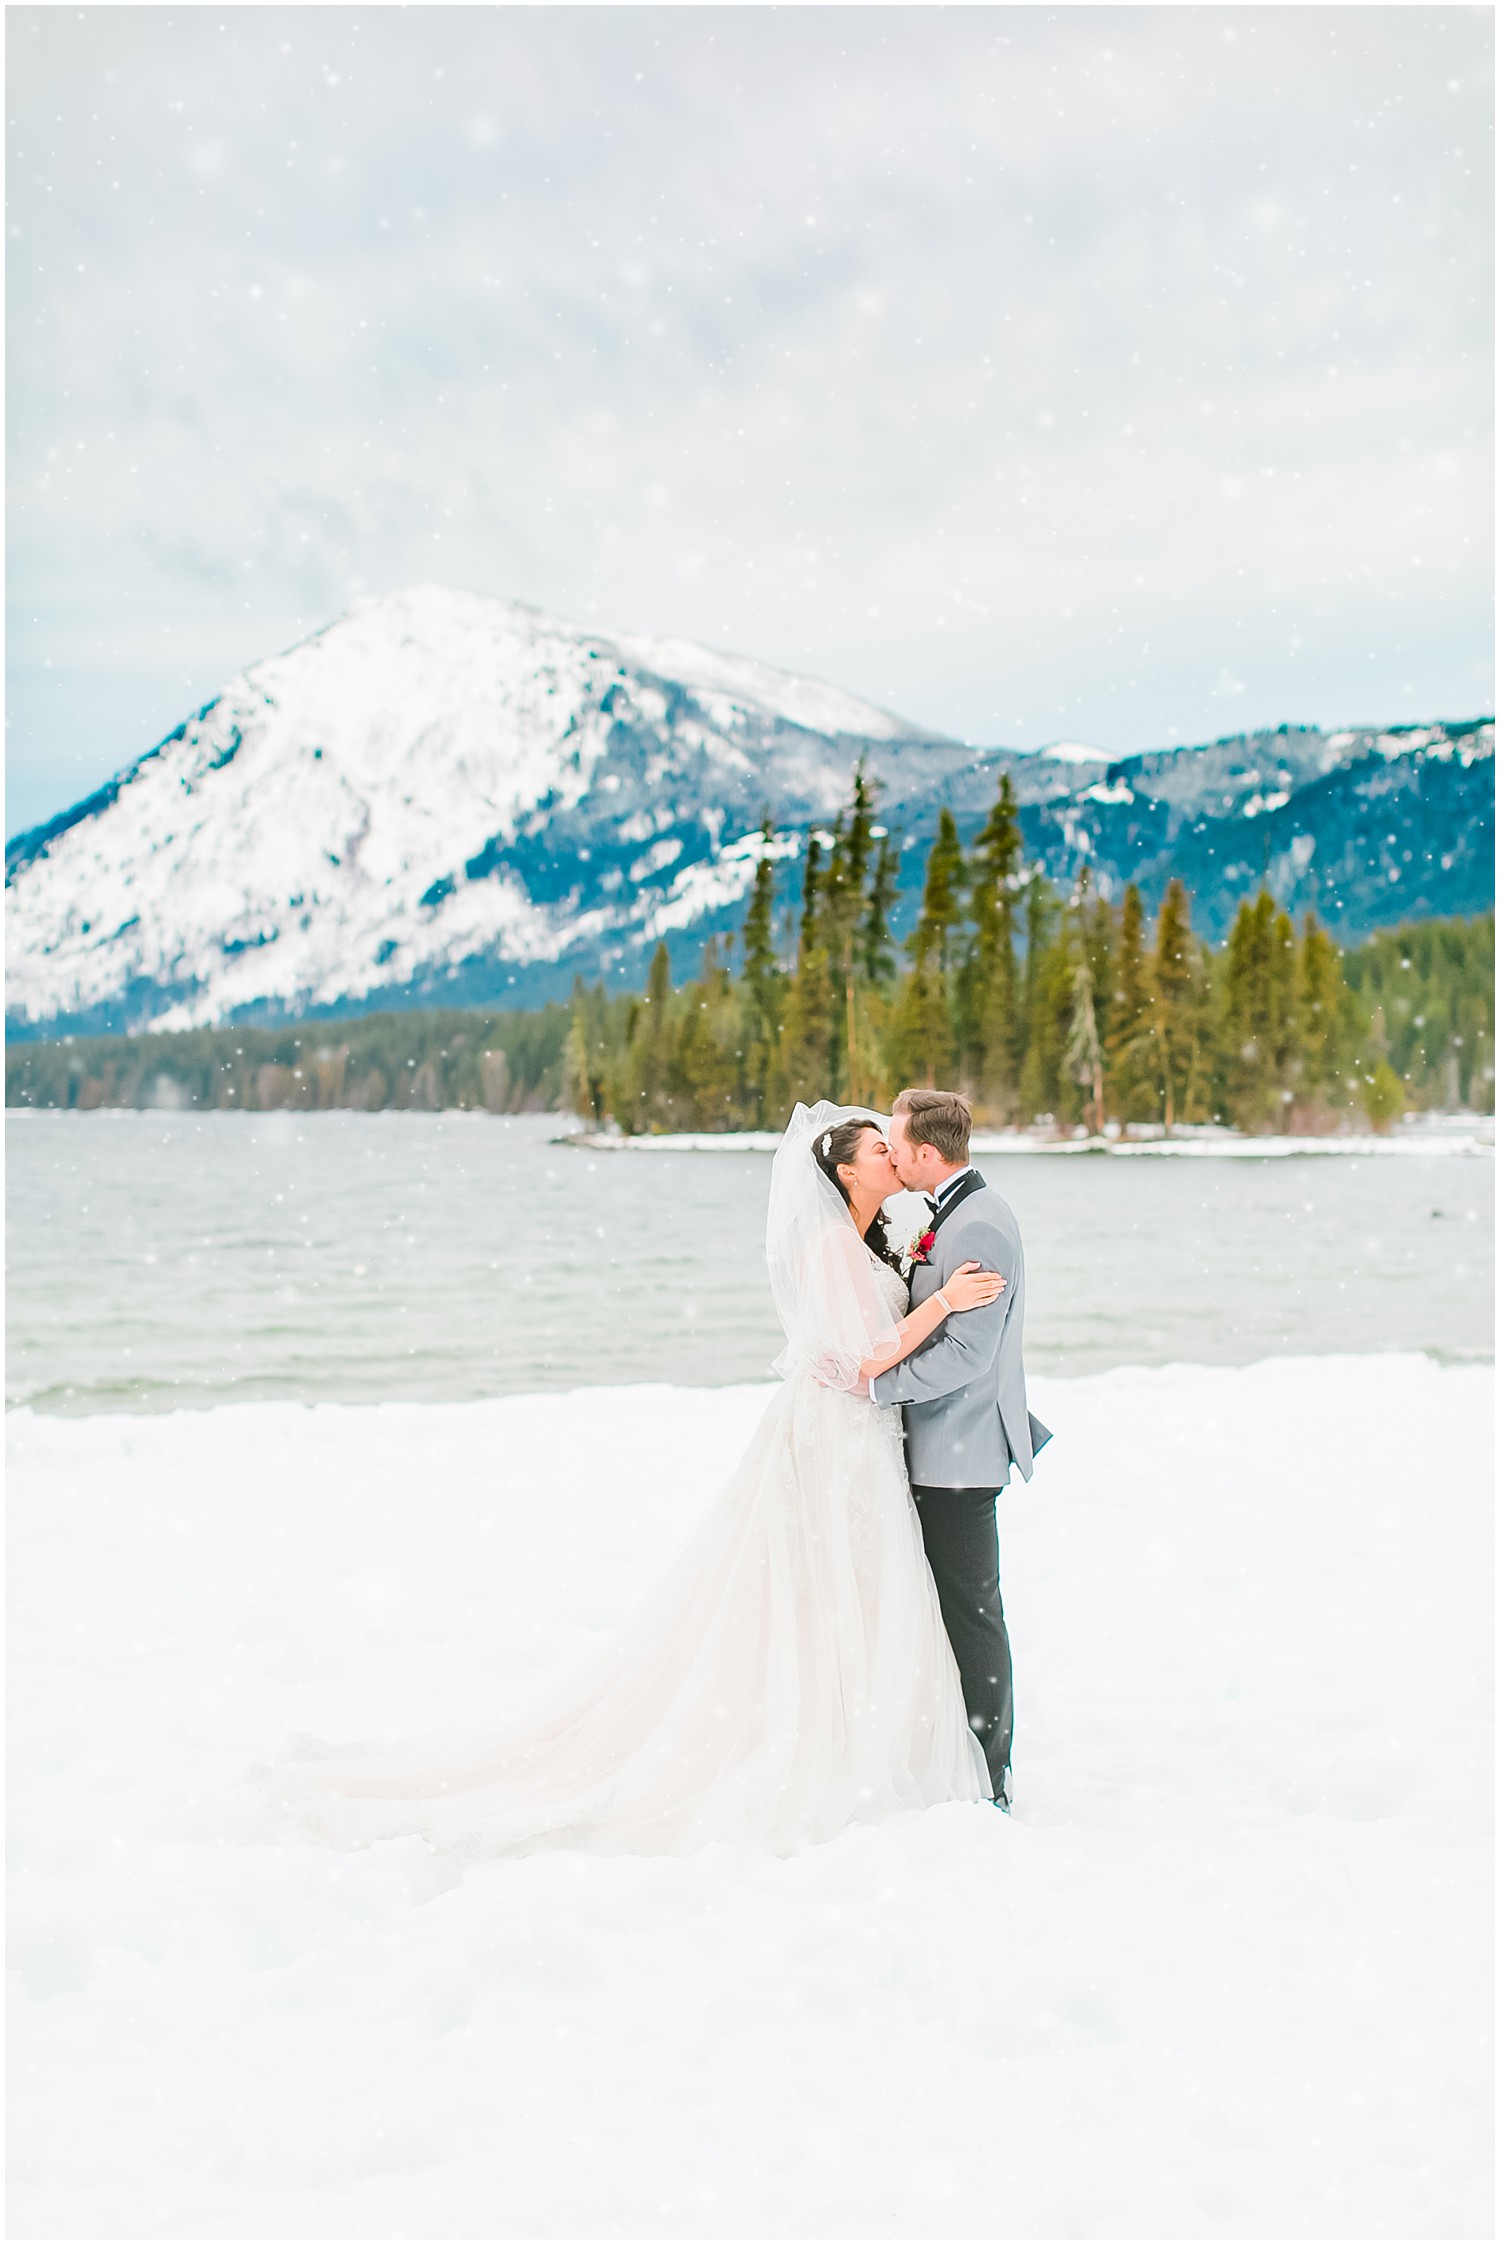 Winter Mountain Springs Lodge Wedding | Jake & Allysa